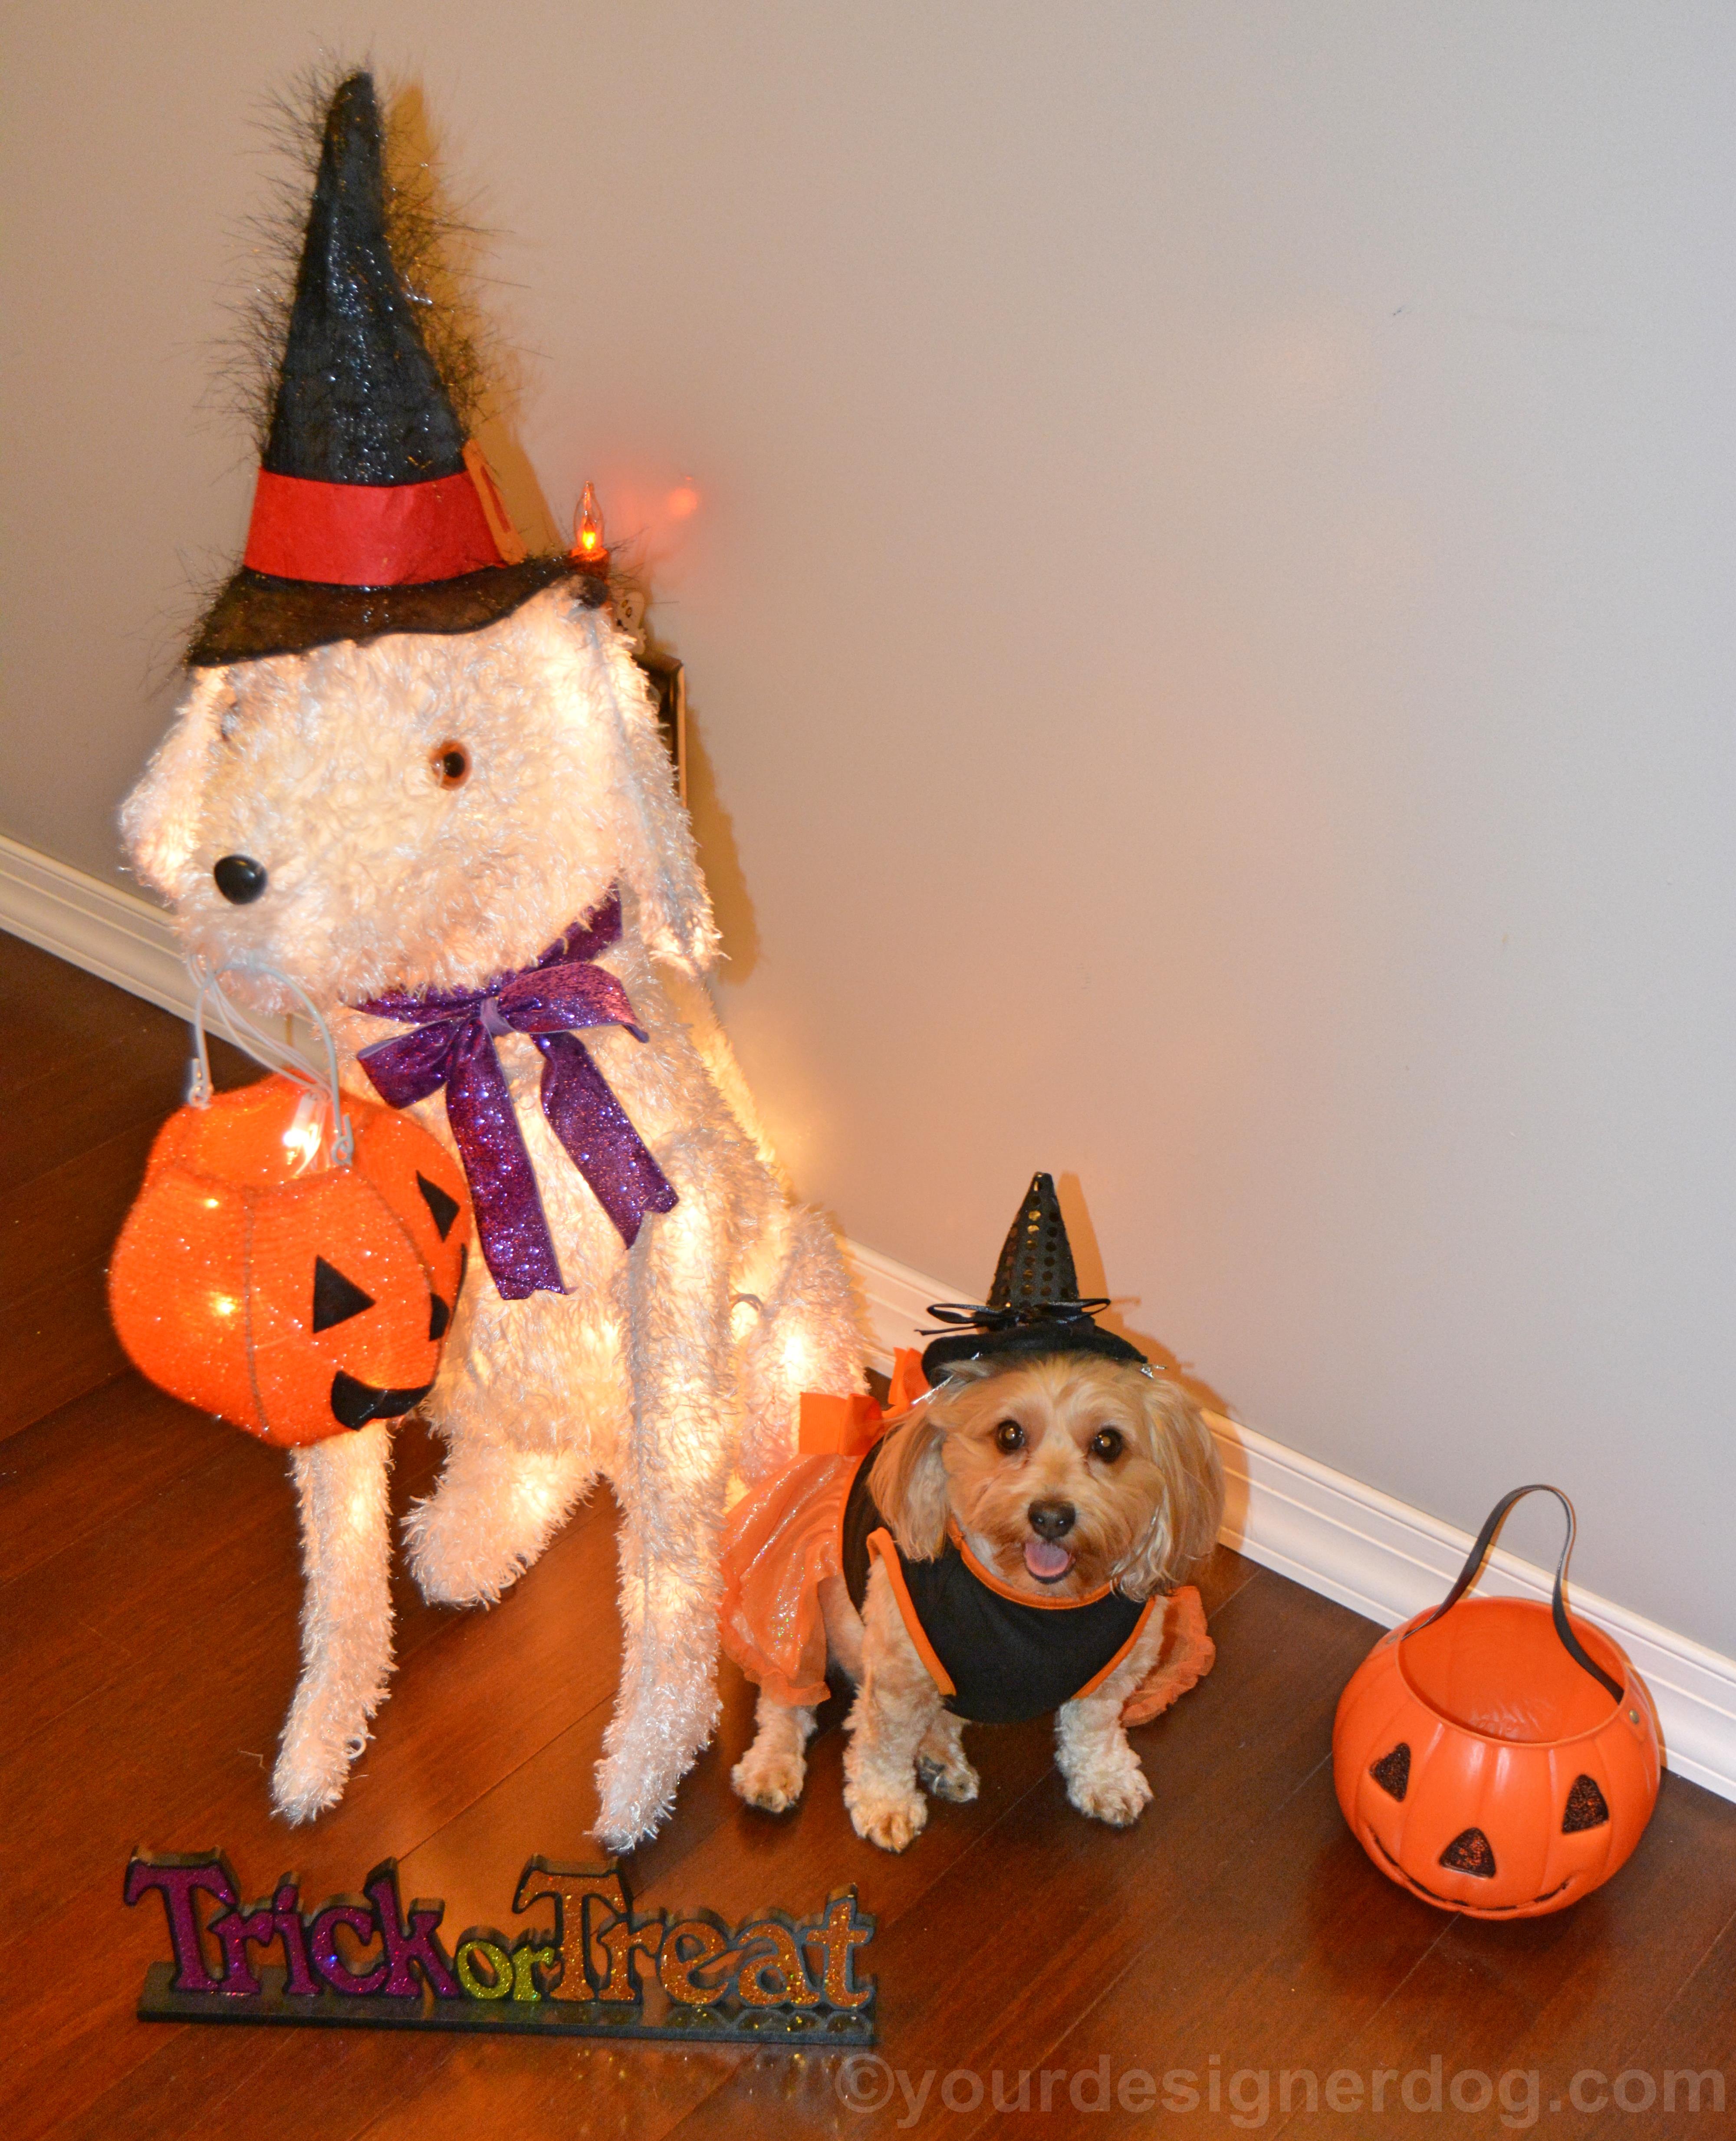 dogs, designer dogs, yorkipoo, yorkie poo, halloween, trick or treat, buddy system, witch costume, jack-o-lantern